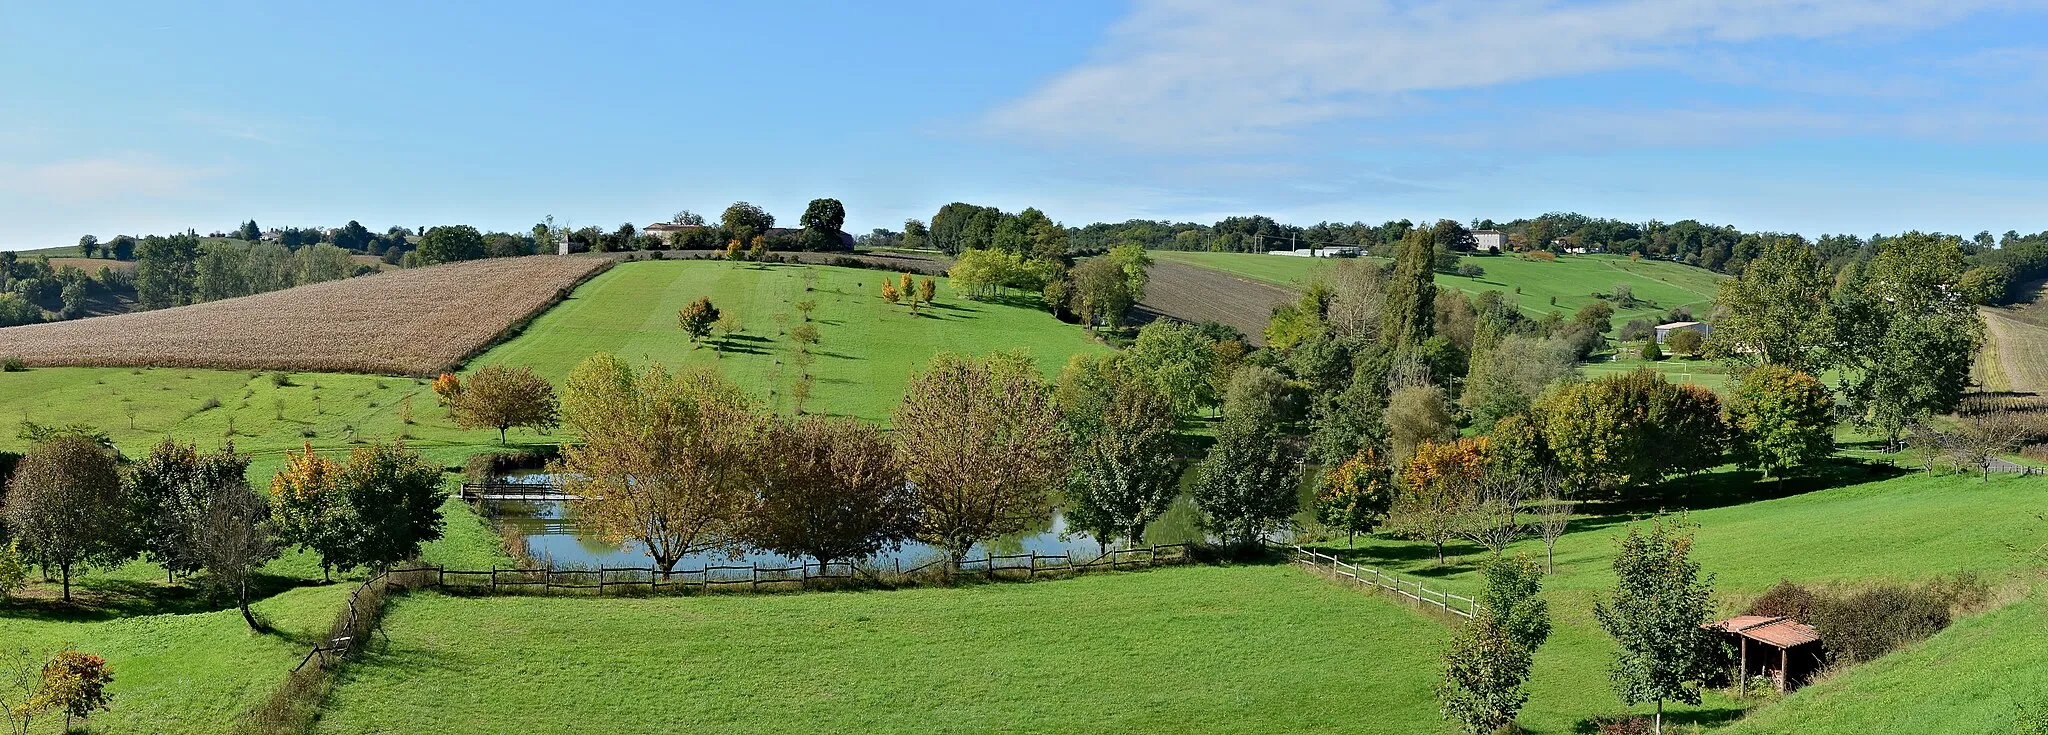 Photo showing: Hilly landscape with a pond, as seen from road D 10, Saint-Laurent-de-Belzagot, Charente,, France.